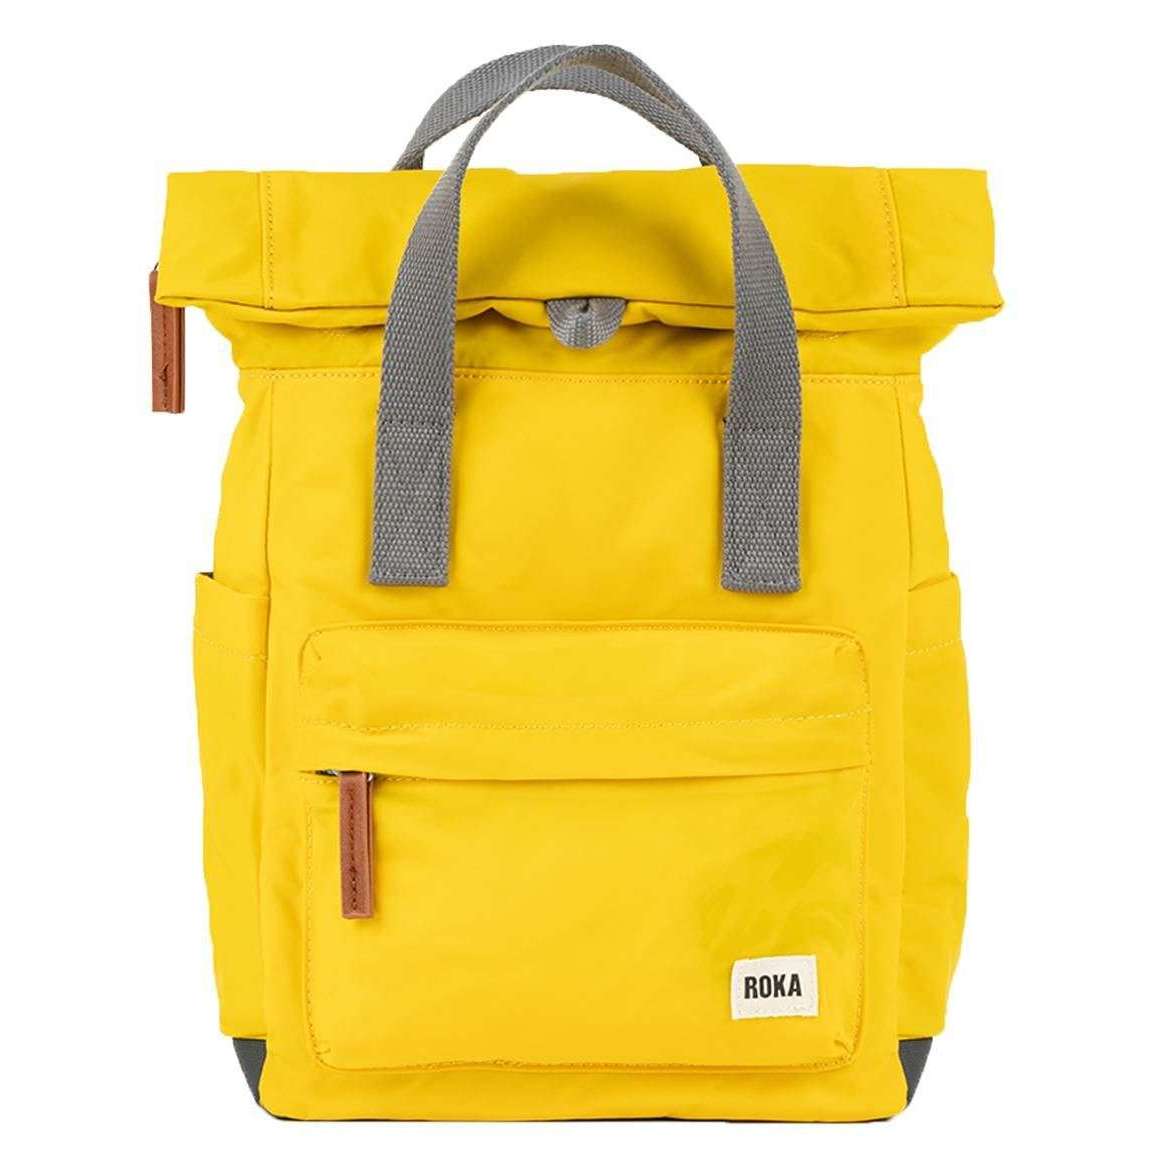 Roka Canfield B Small Sustainable Nylon Backpack - Mustard Yellow